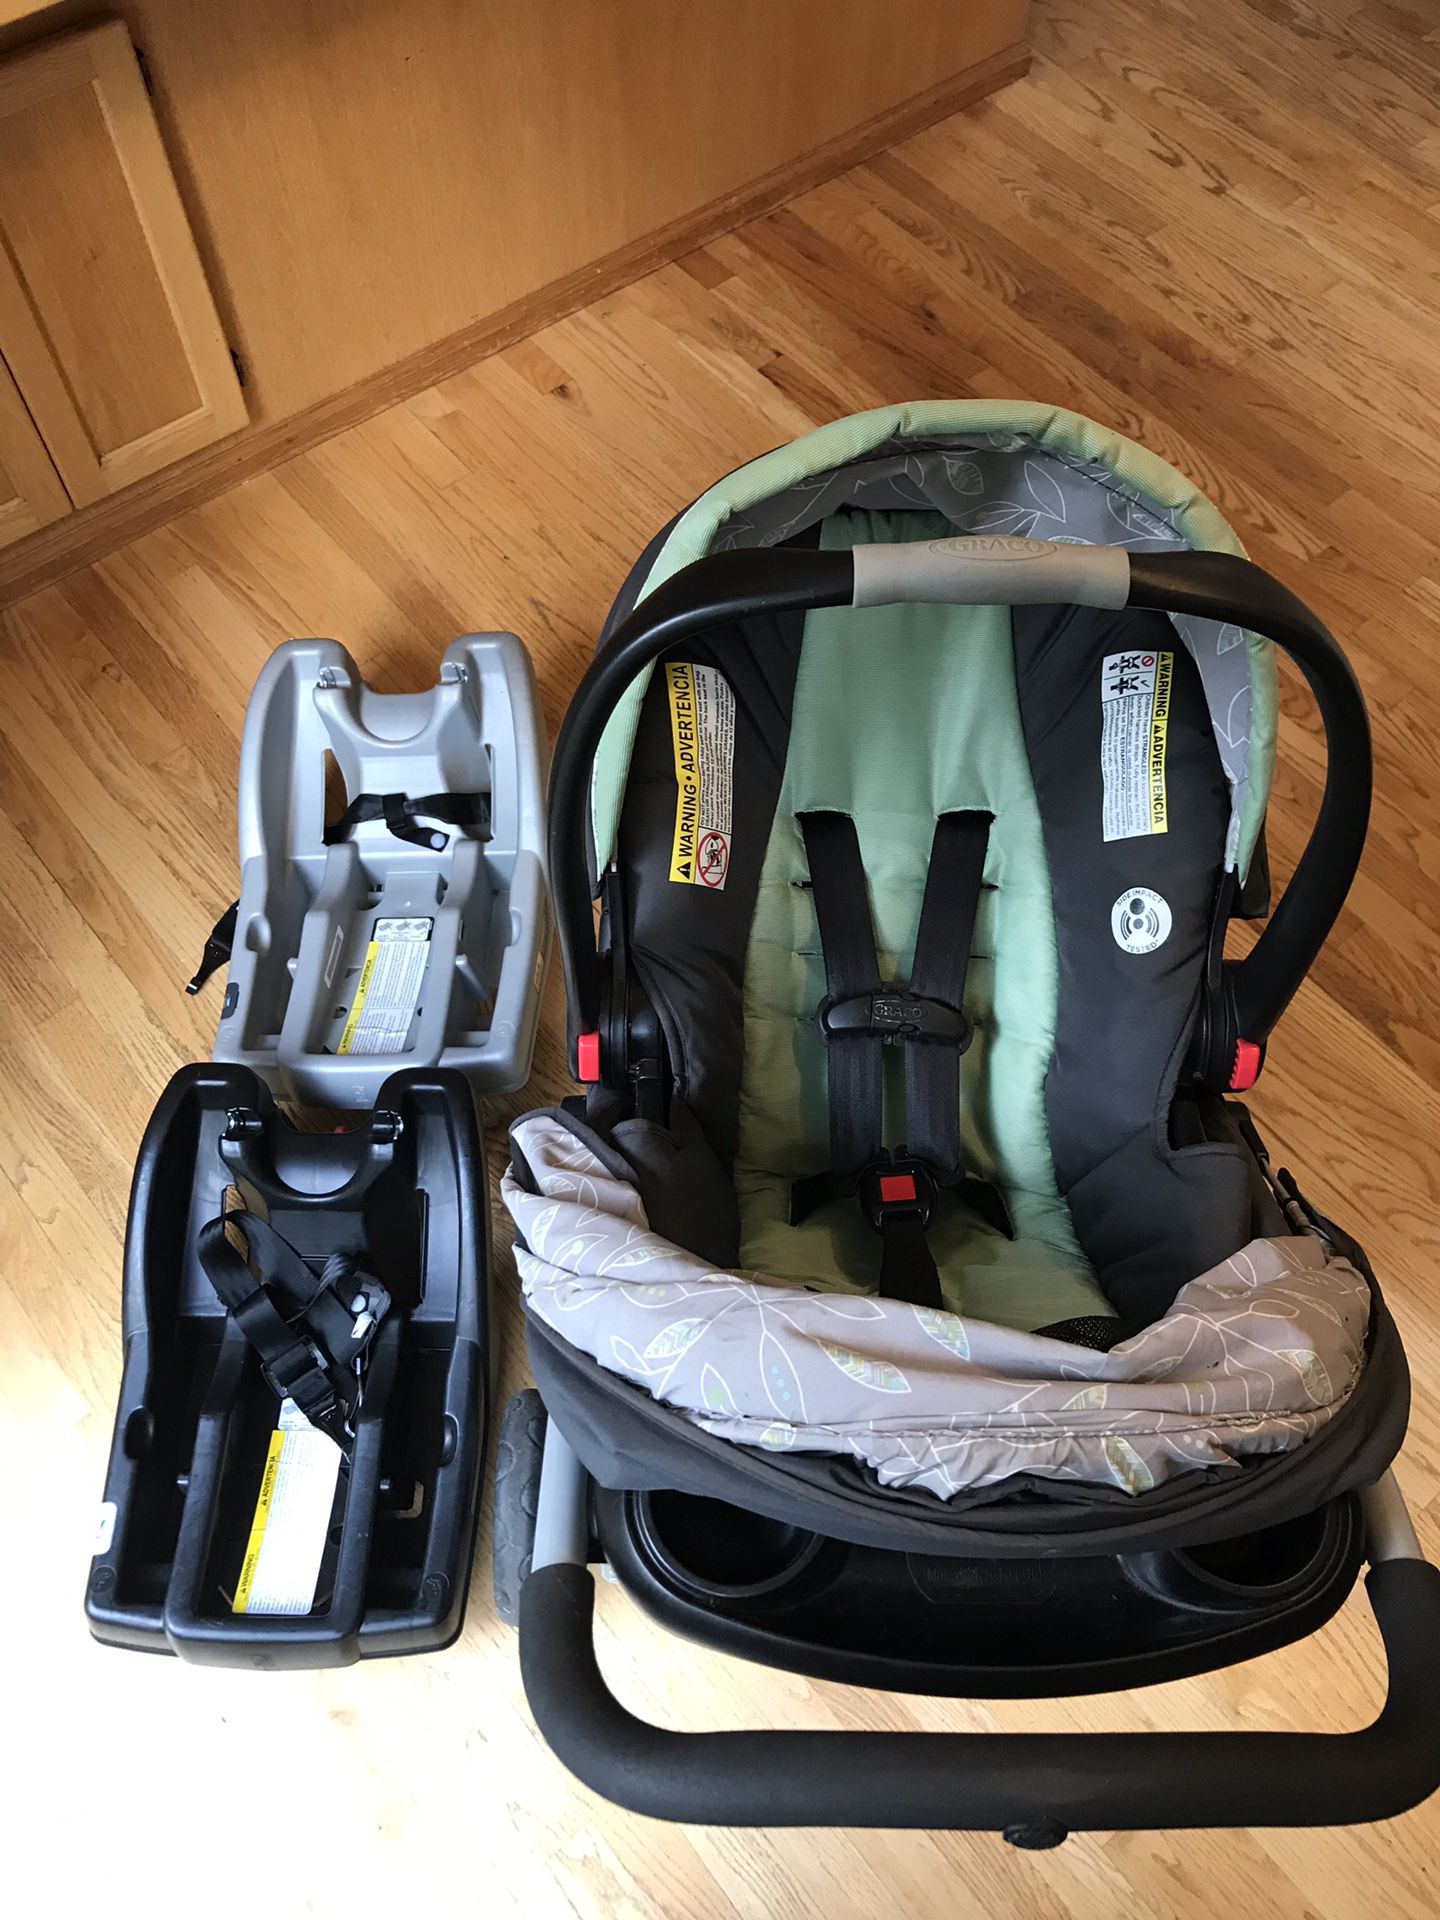 Graco Snugride 30 infant car seat, bases, and stroller